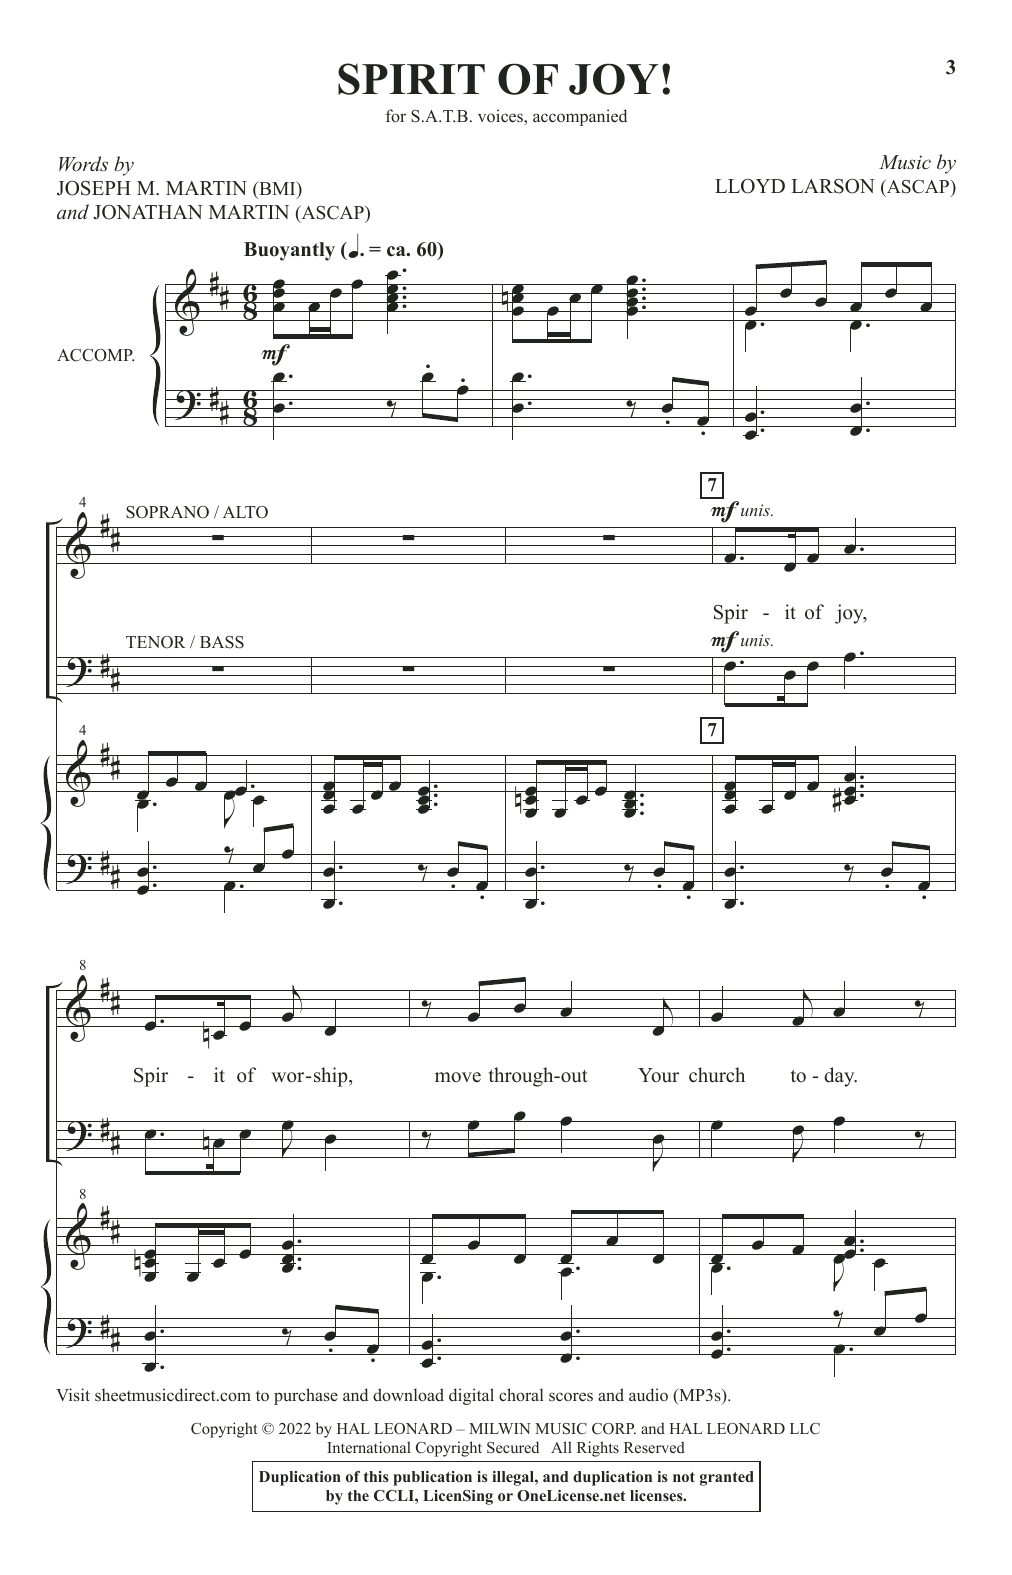 Joseph M. Martin, Jonathan Martin and Lloyd Larson Spirit Of Joy! Sheet Music Notes & Chords for SATB Choir - Download or Print PDF